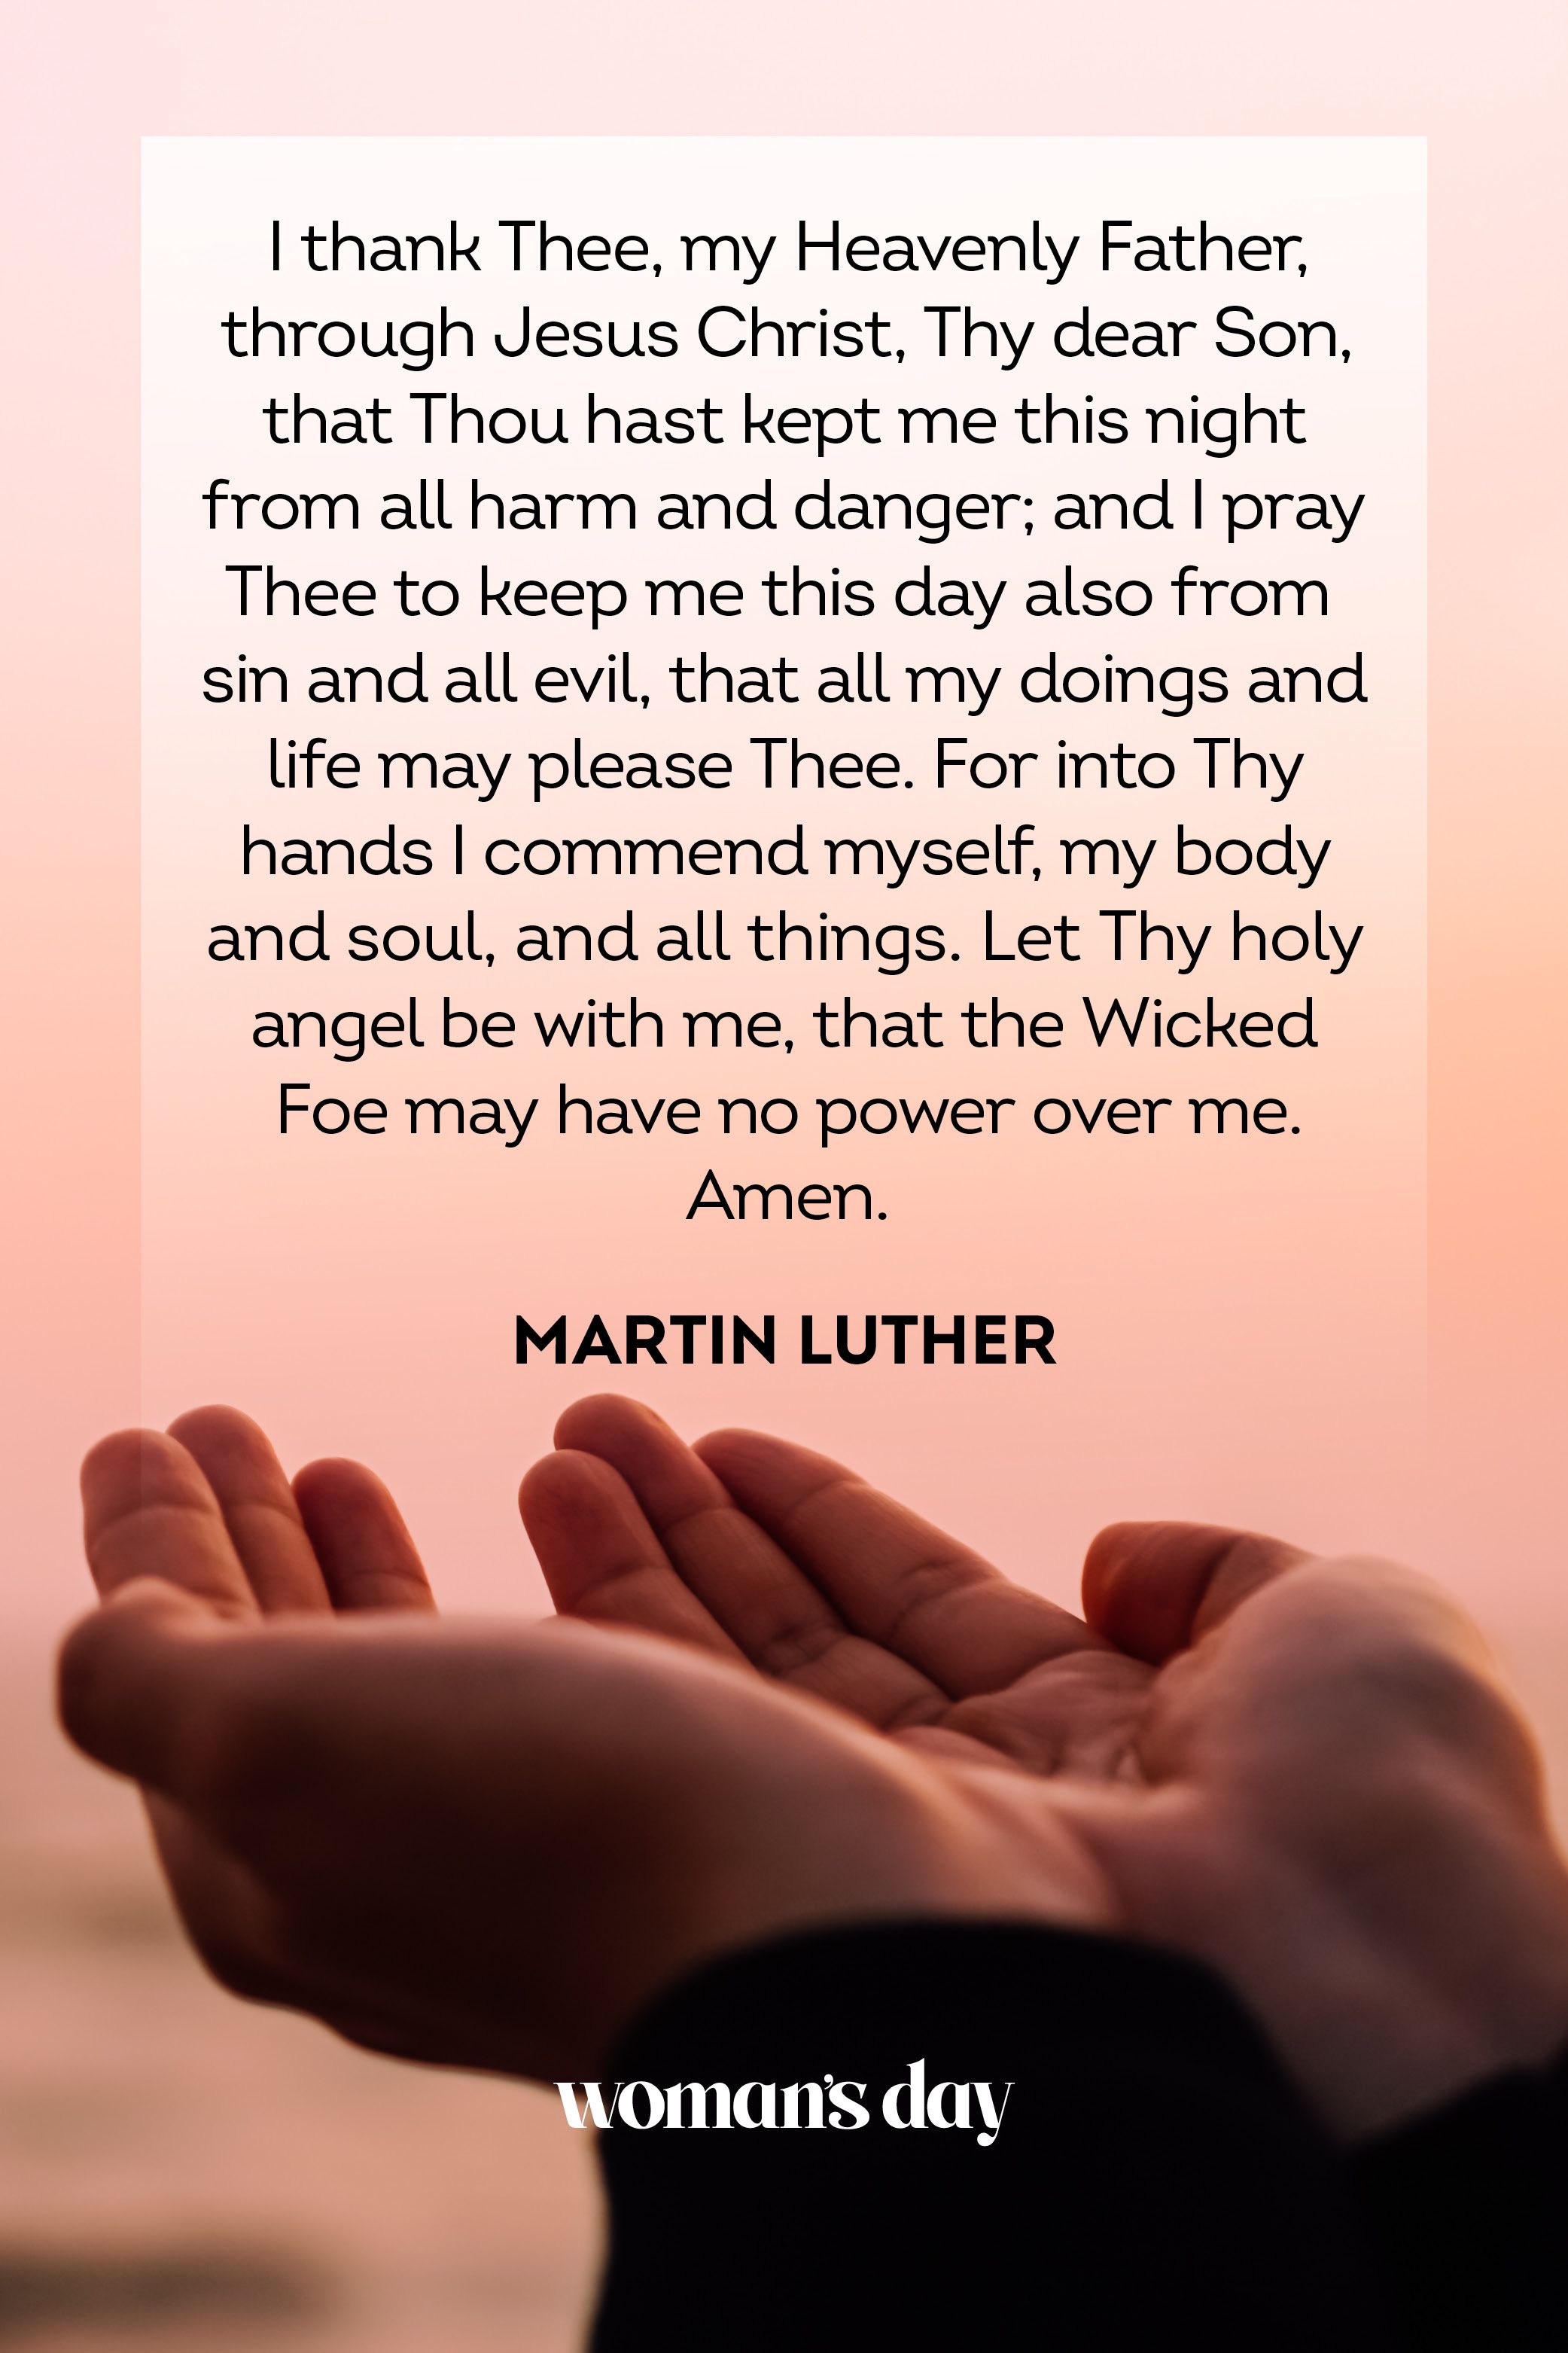 good night prayer quotes